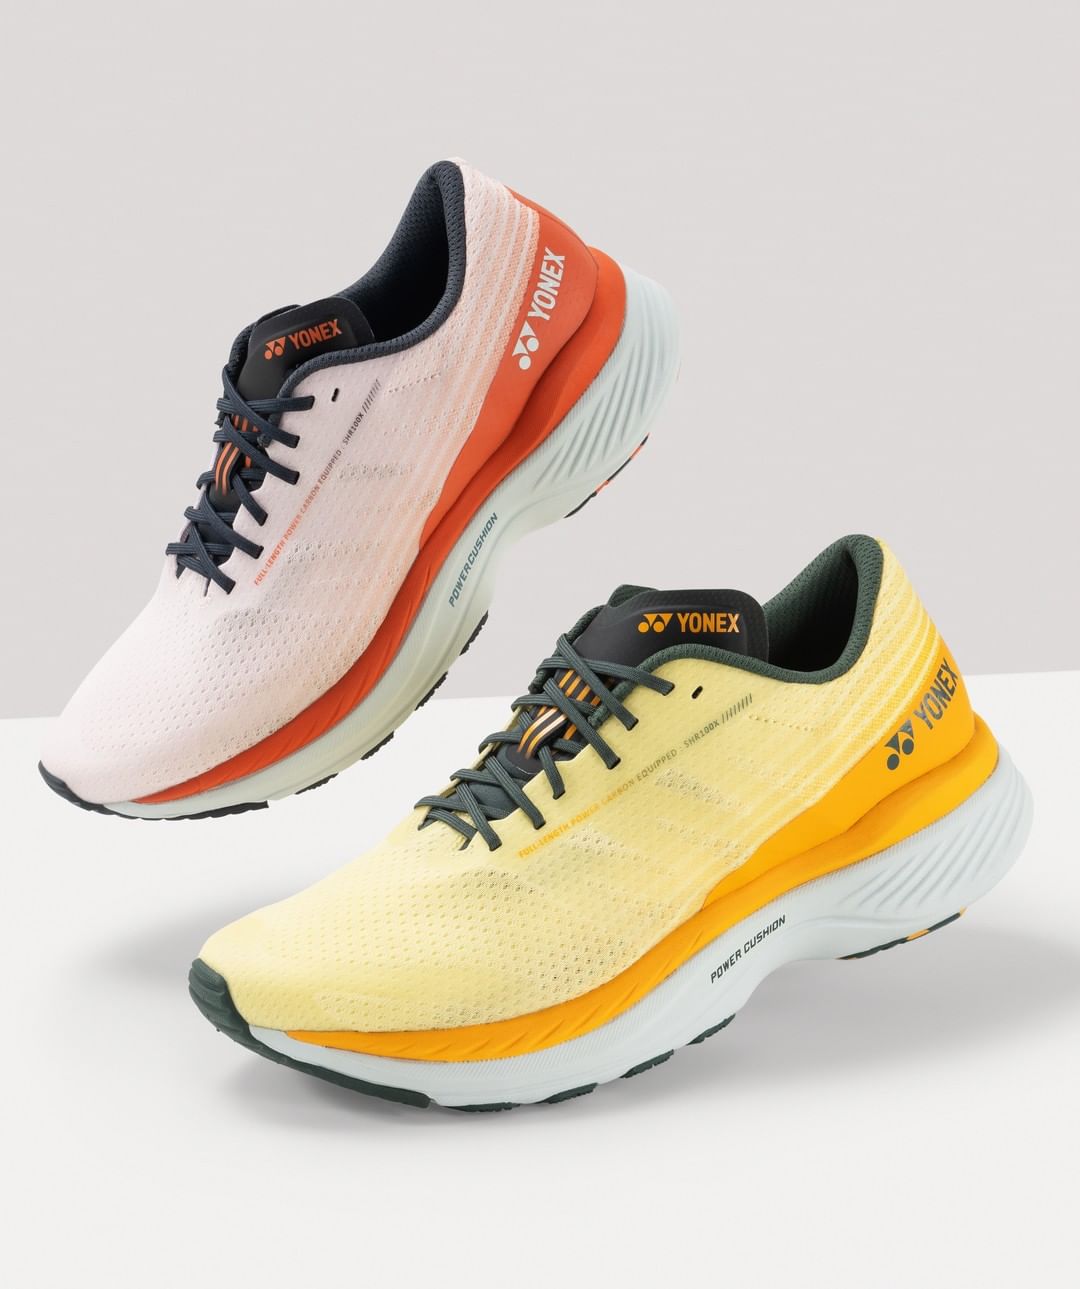 Yonex Saferun 100X (Black/White) Men's Running Training Shoe - PREORDER